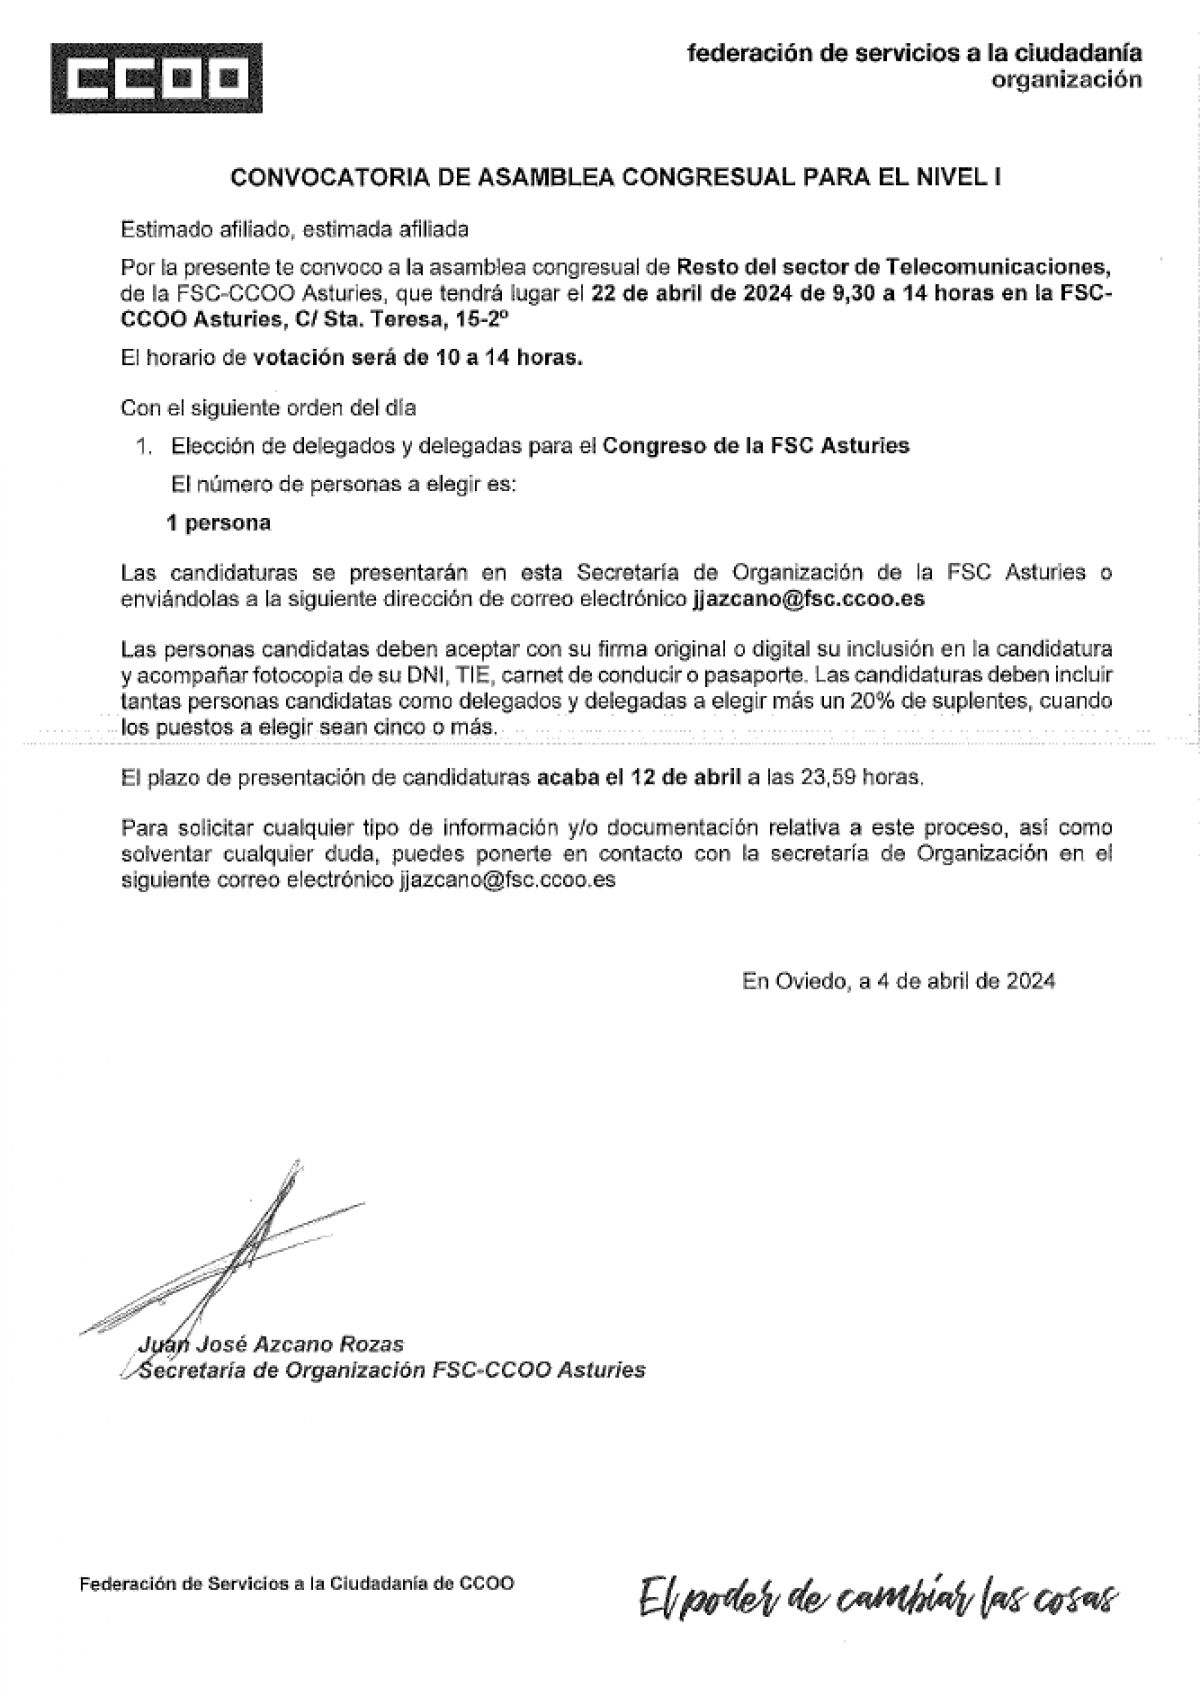 Asamblea Congresual. Congreso FSC Asturias. Sector Telecomunicaciones Resto